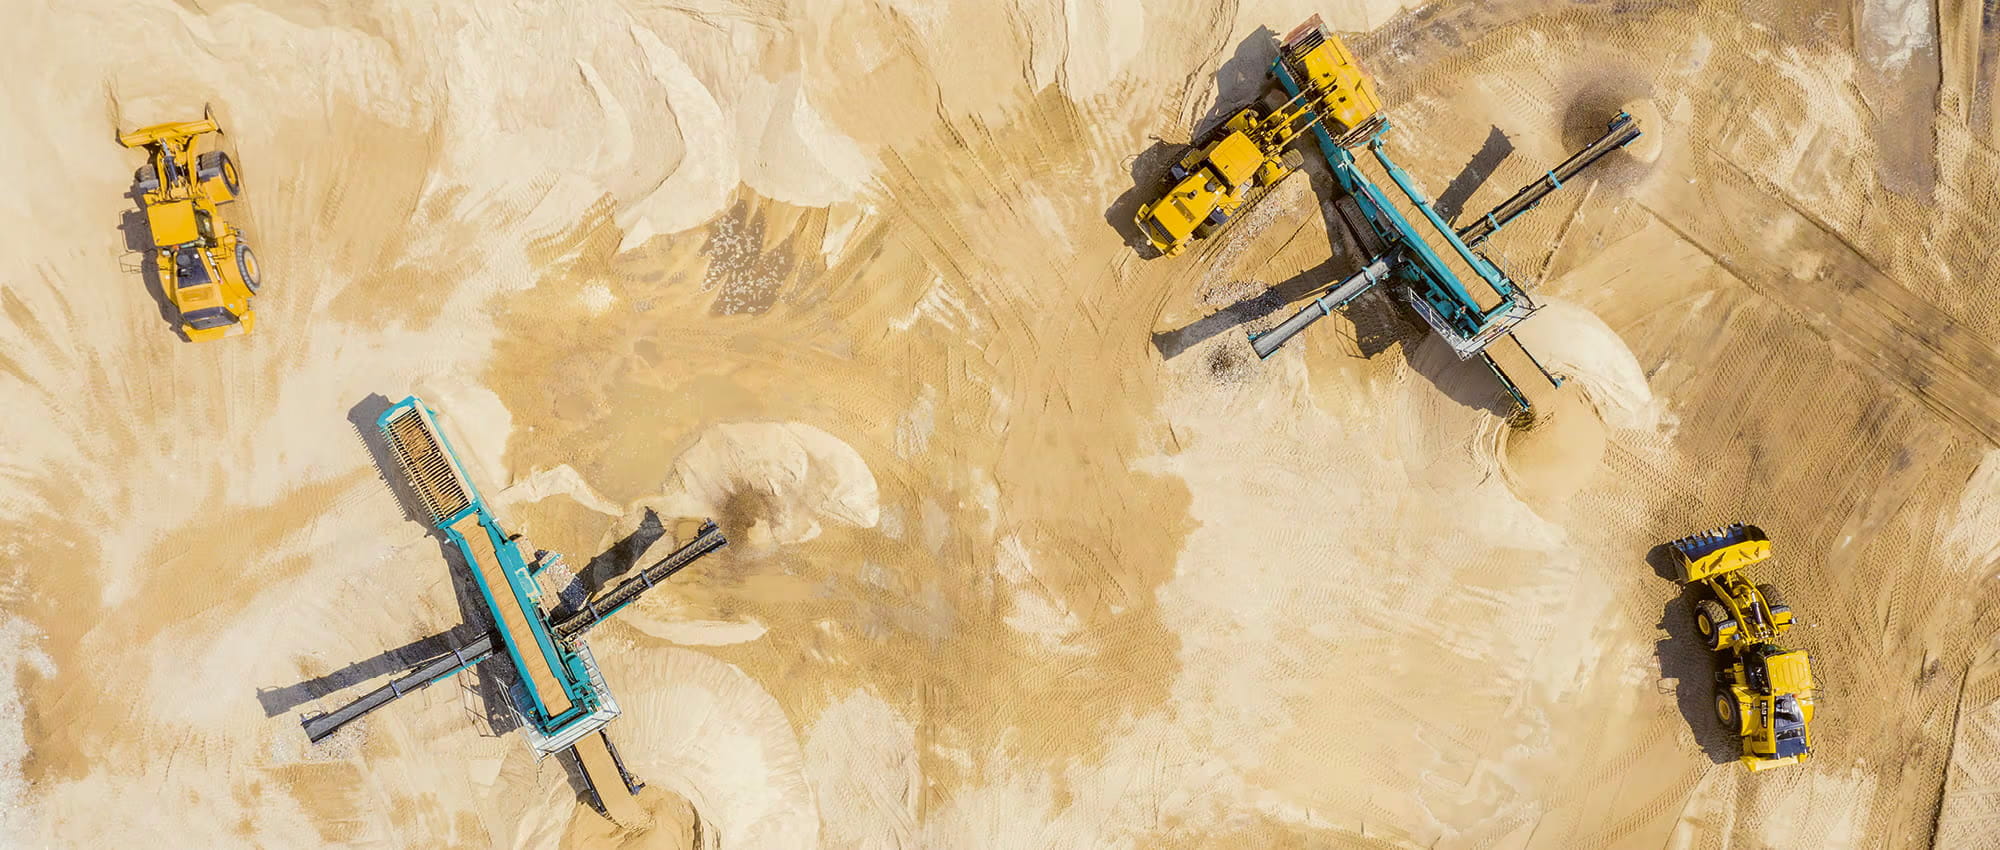 Baufahrzeuge bauen Sand ab